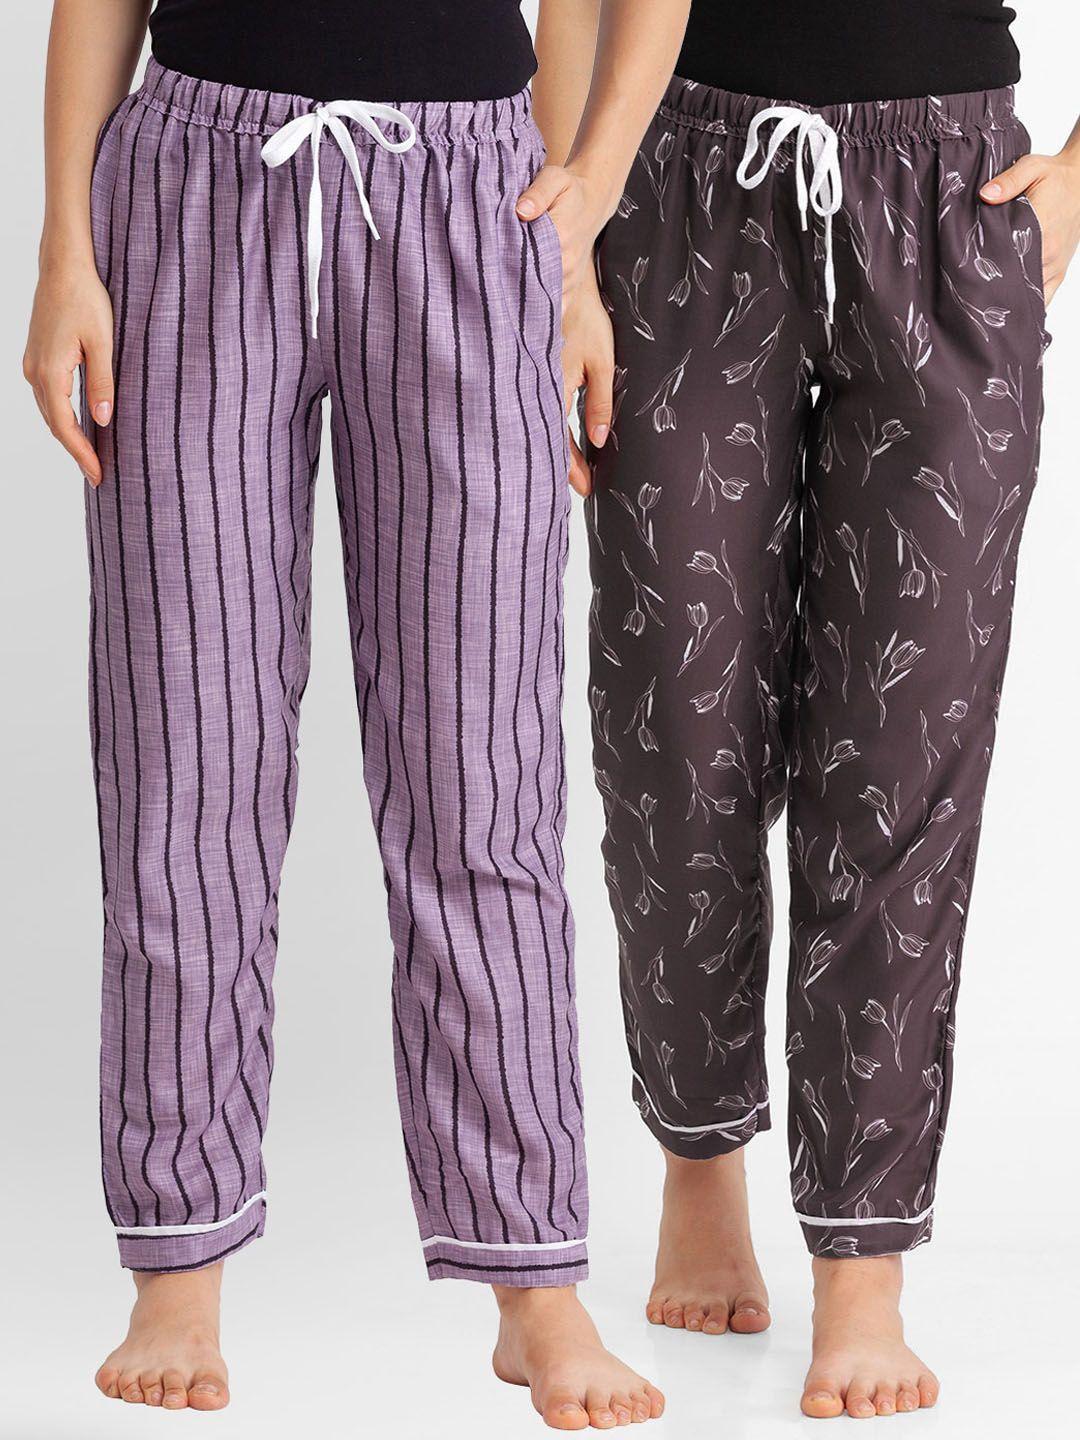 fashionrack set of 2 women lavender & brown printed cotton lounge pants